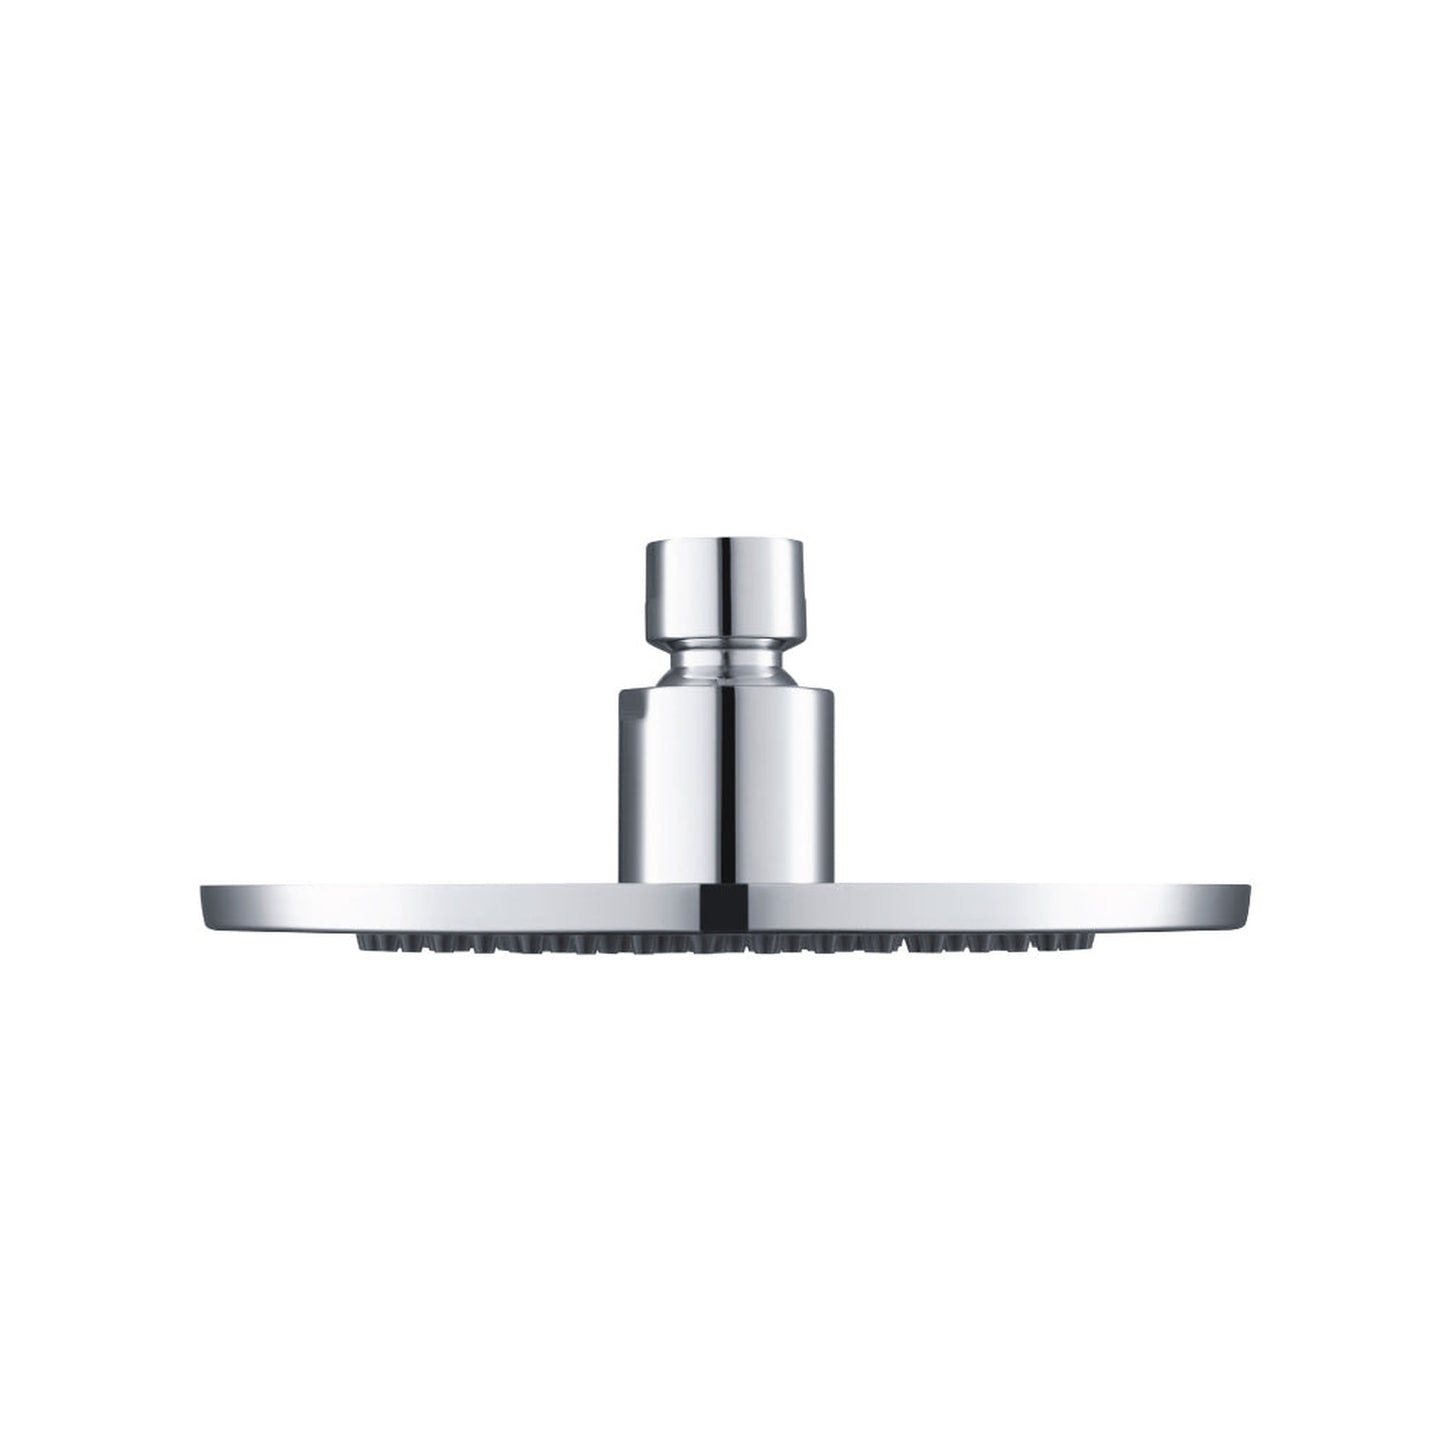 Isenberg Universal Fixtures 6" Single Function Round Chrome Solid Brass Rain Shower Head